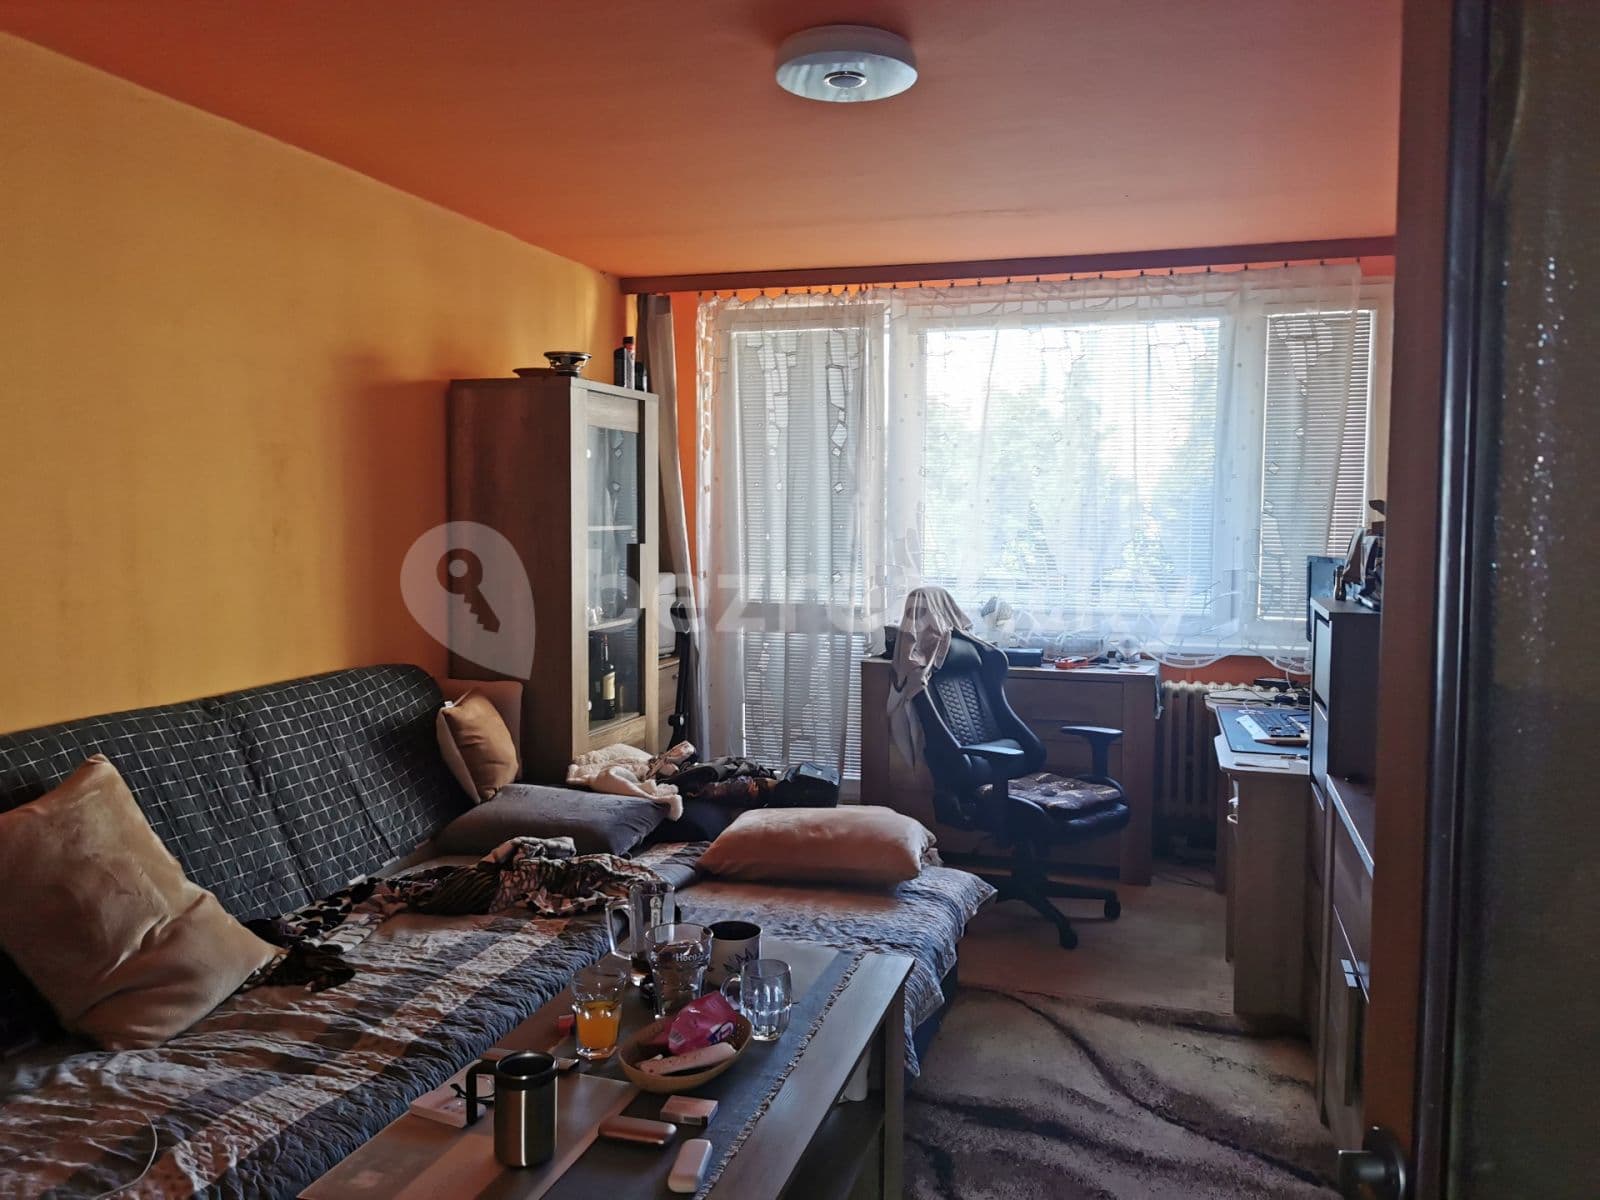 3 bedroom flat for sale, 78 m², Chalupkova, Prague, Prague